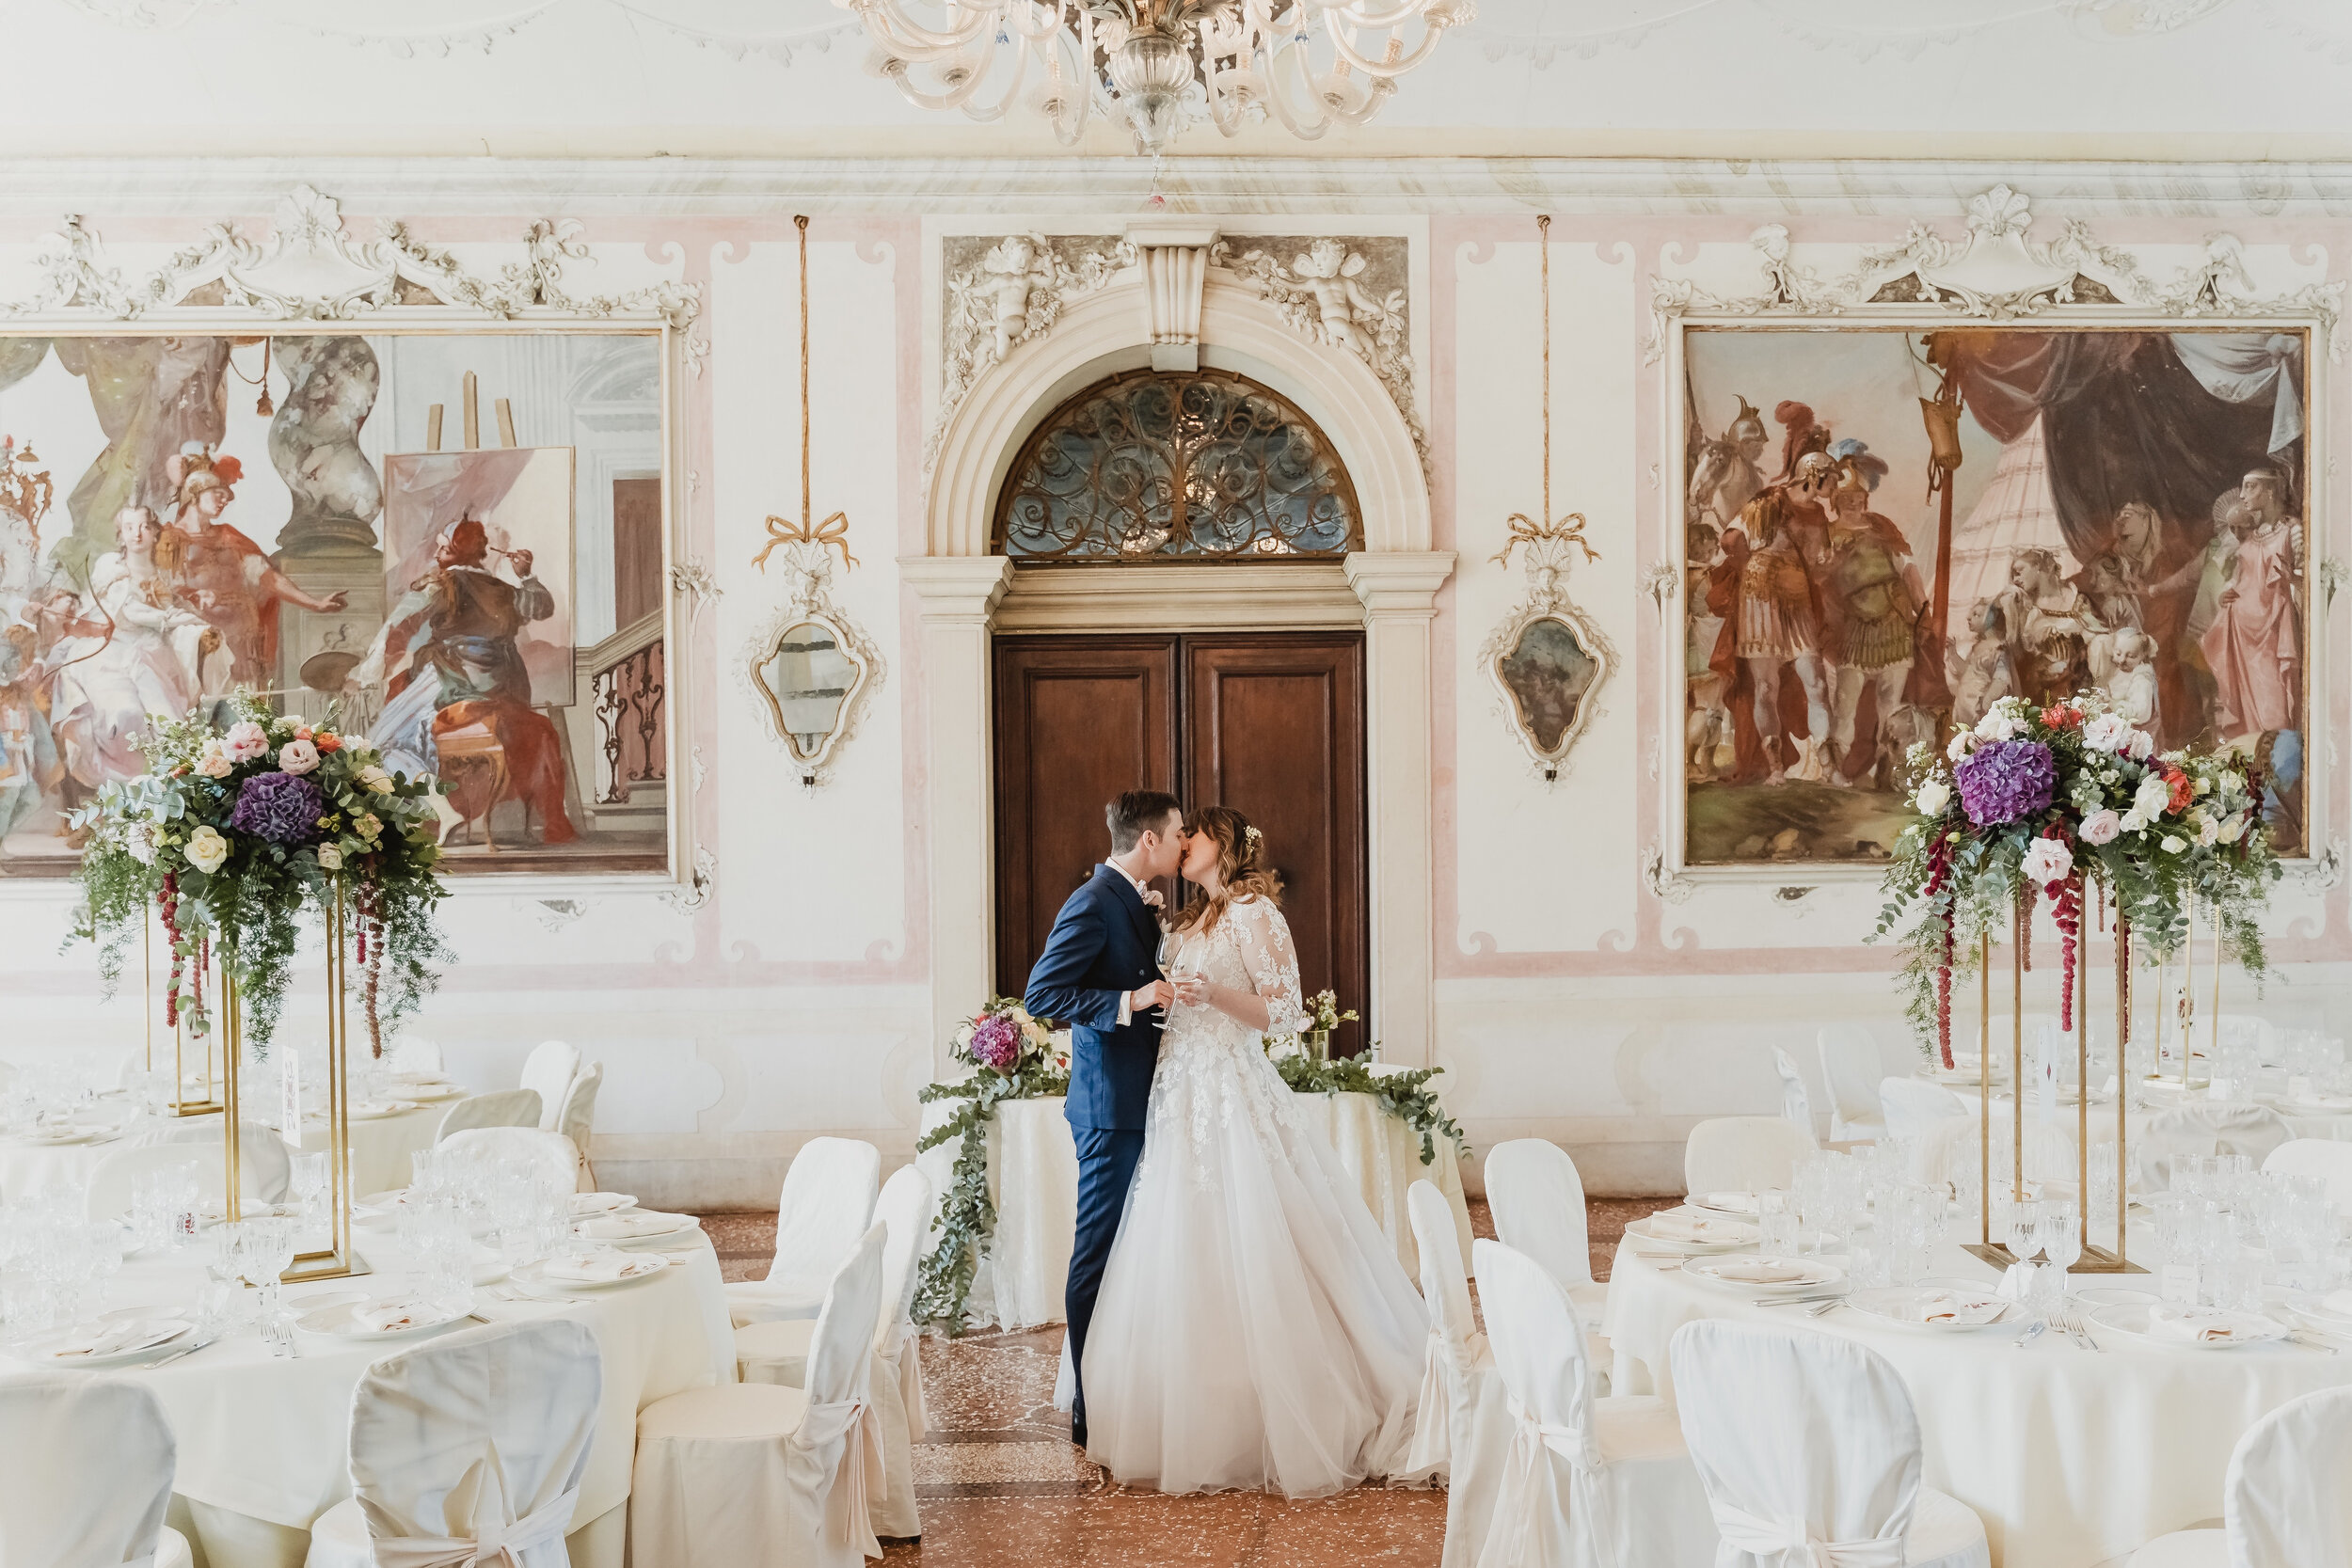 Matrimonio-villa-ca'-marcello-fotografo-matrimonio-Venezia-81.jpg